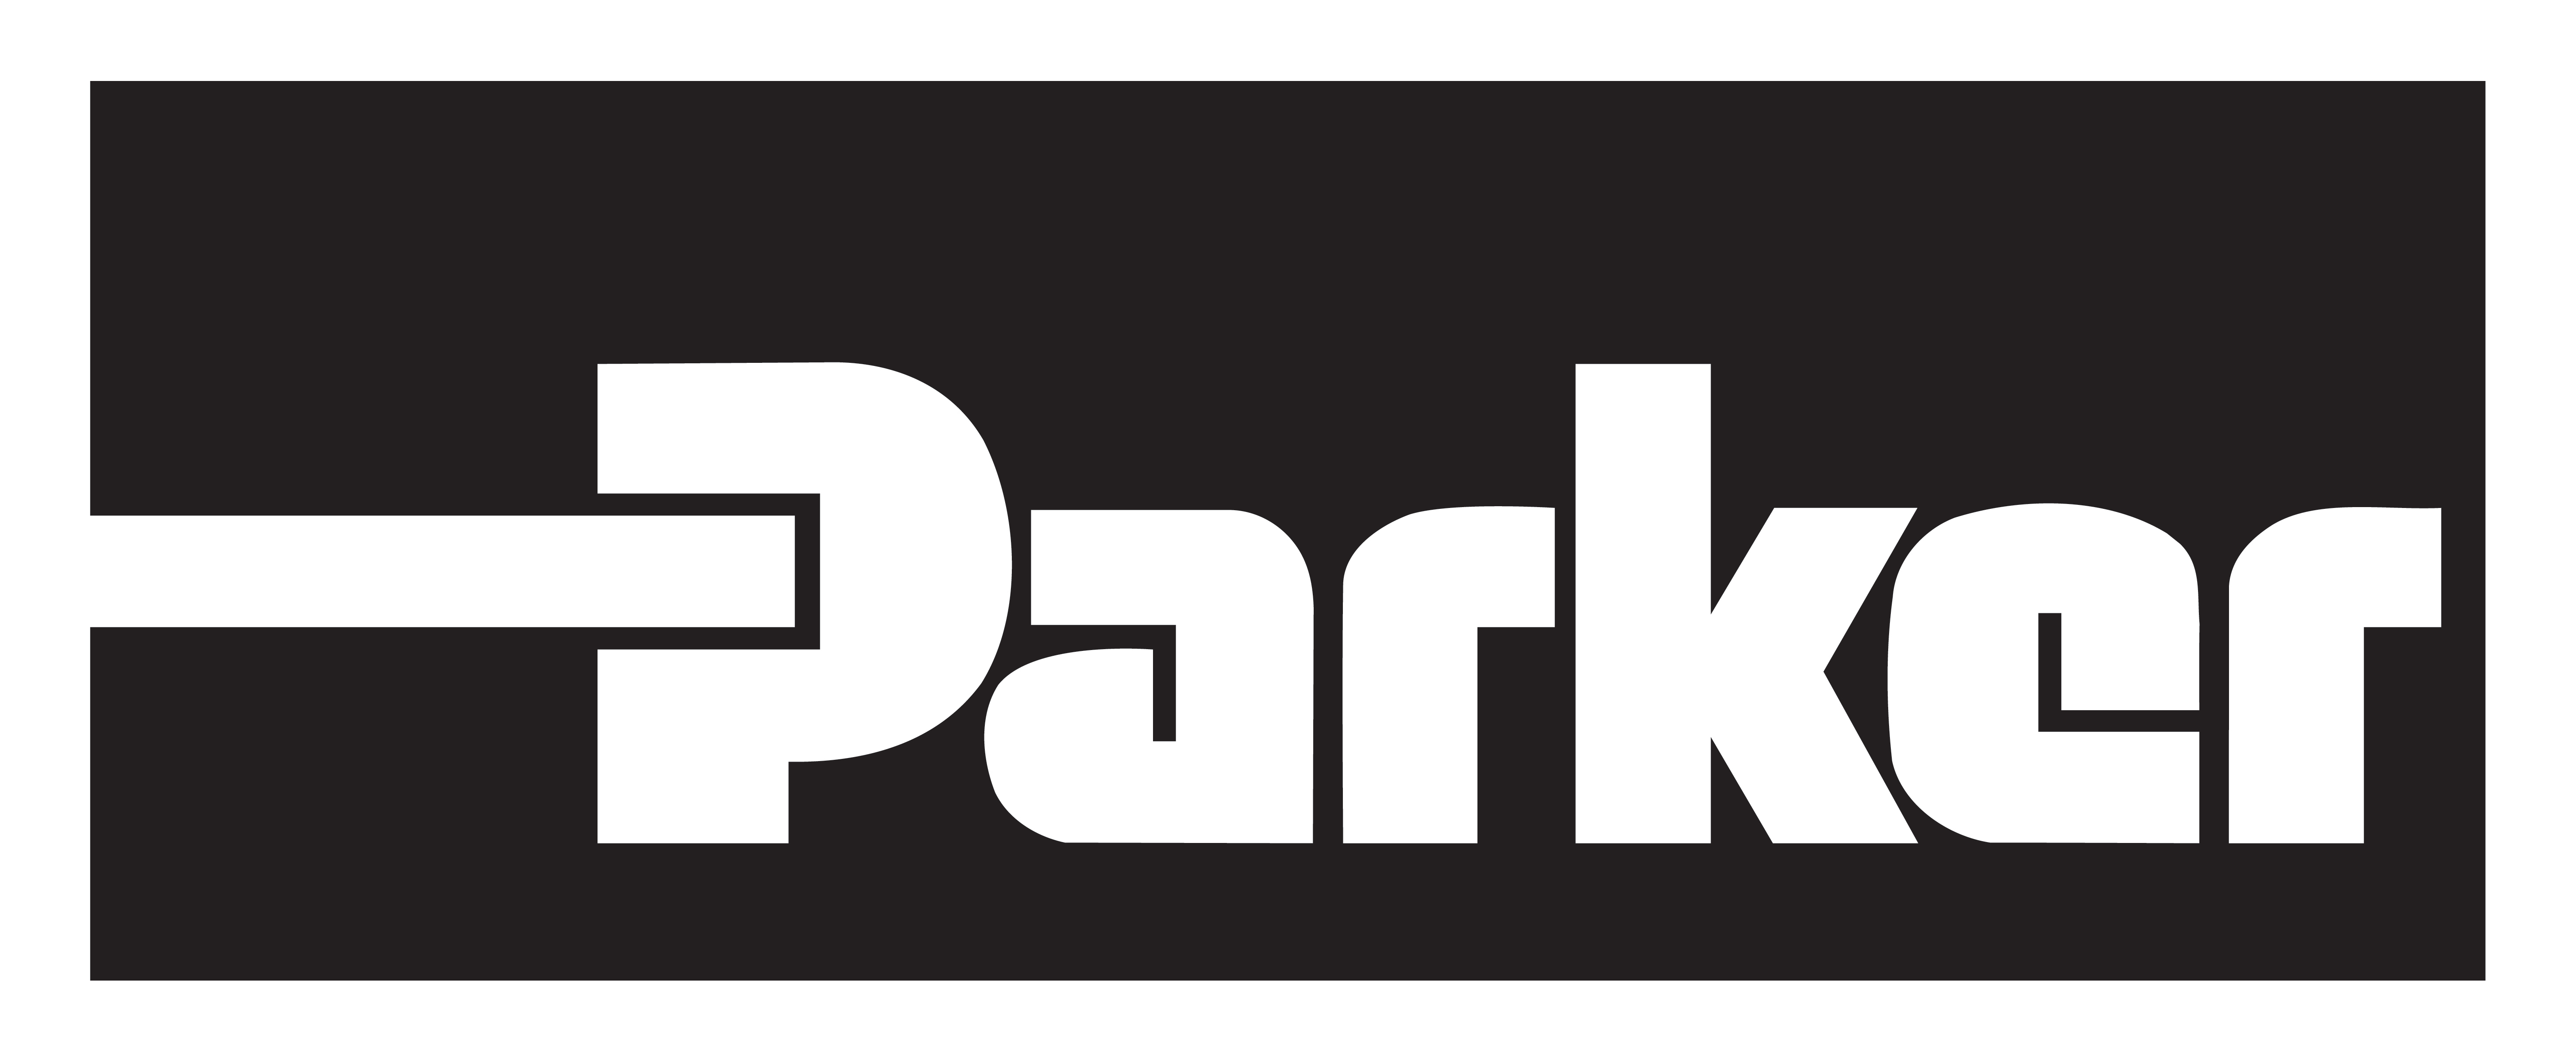 Download Parker Hannifin Logo PNG Image for Free